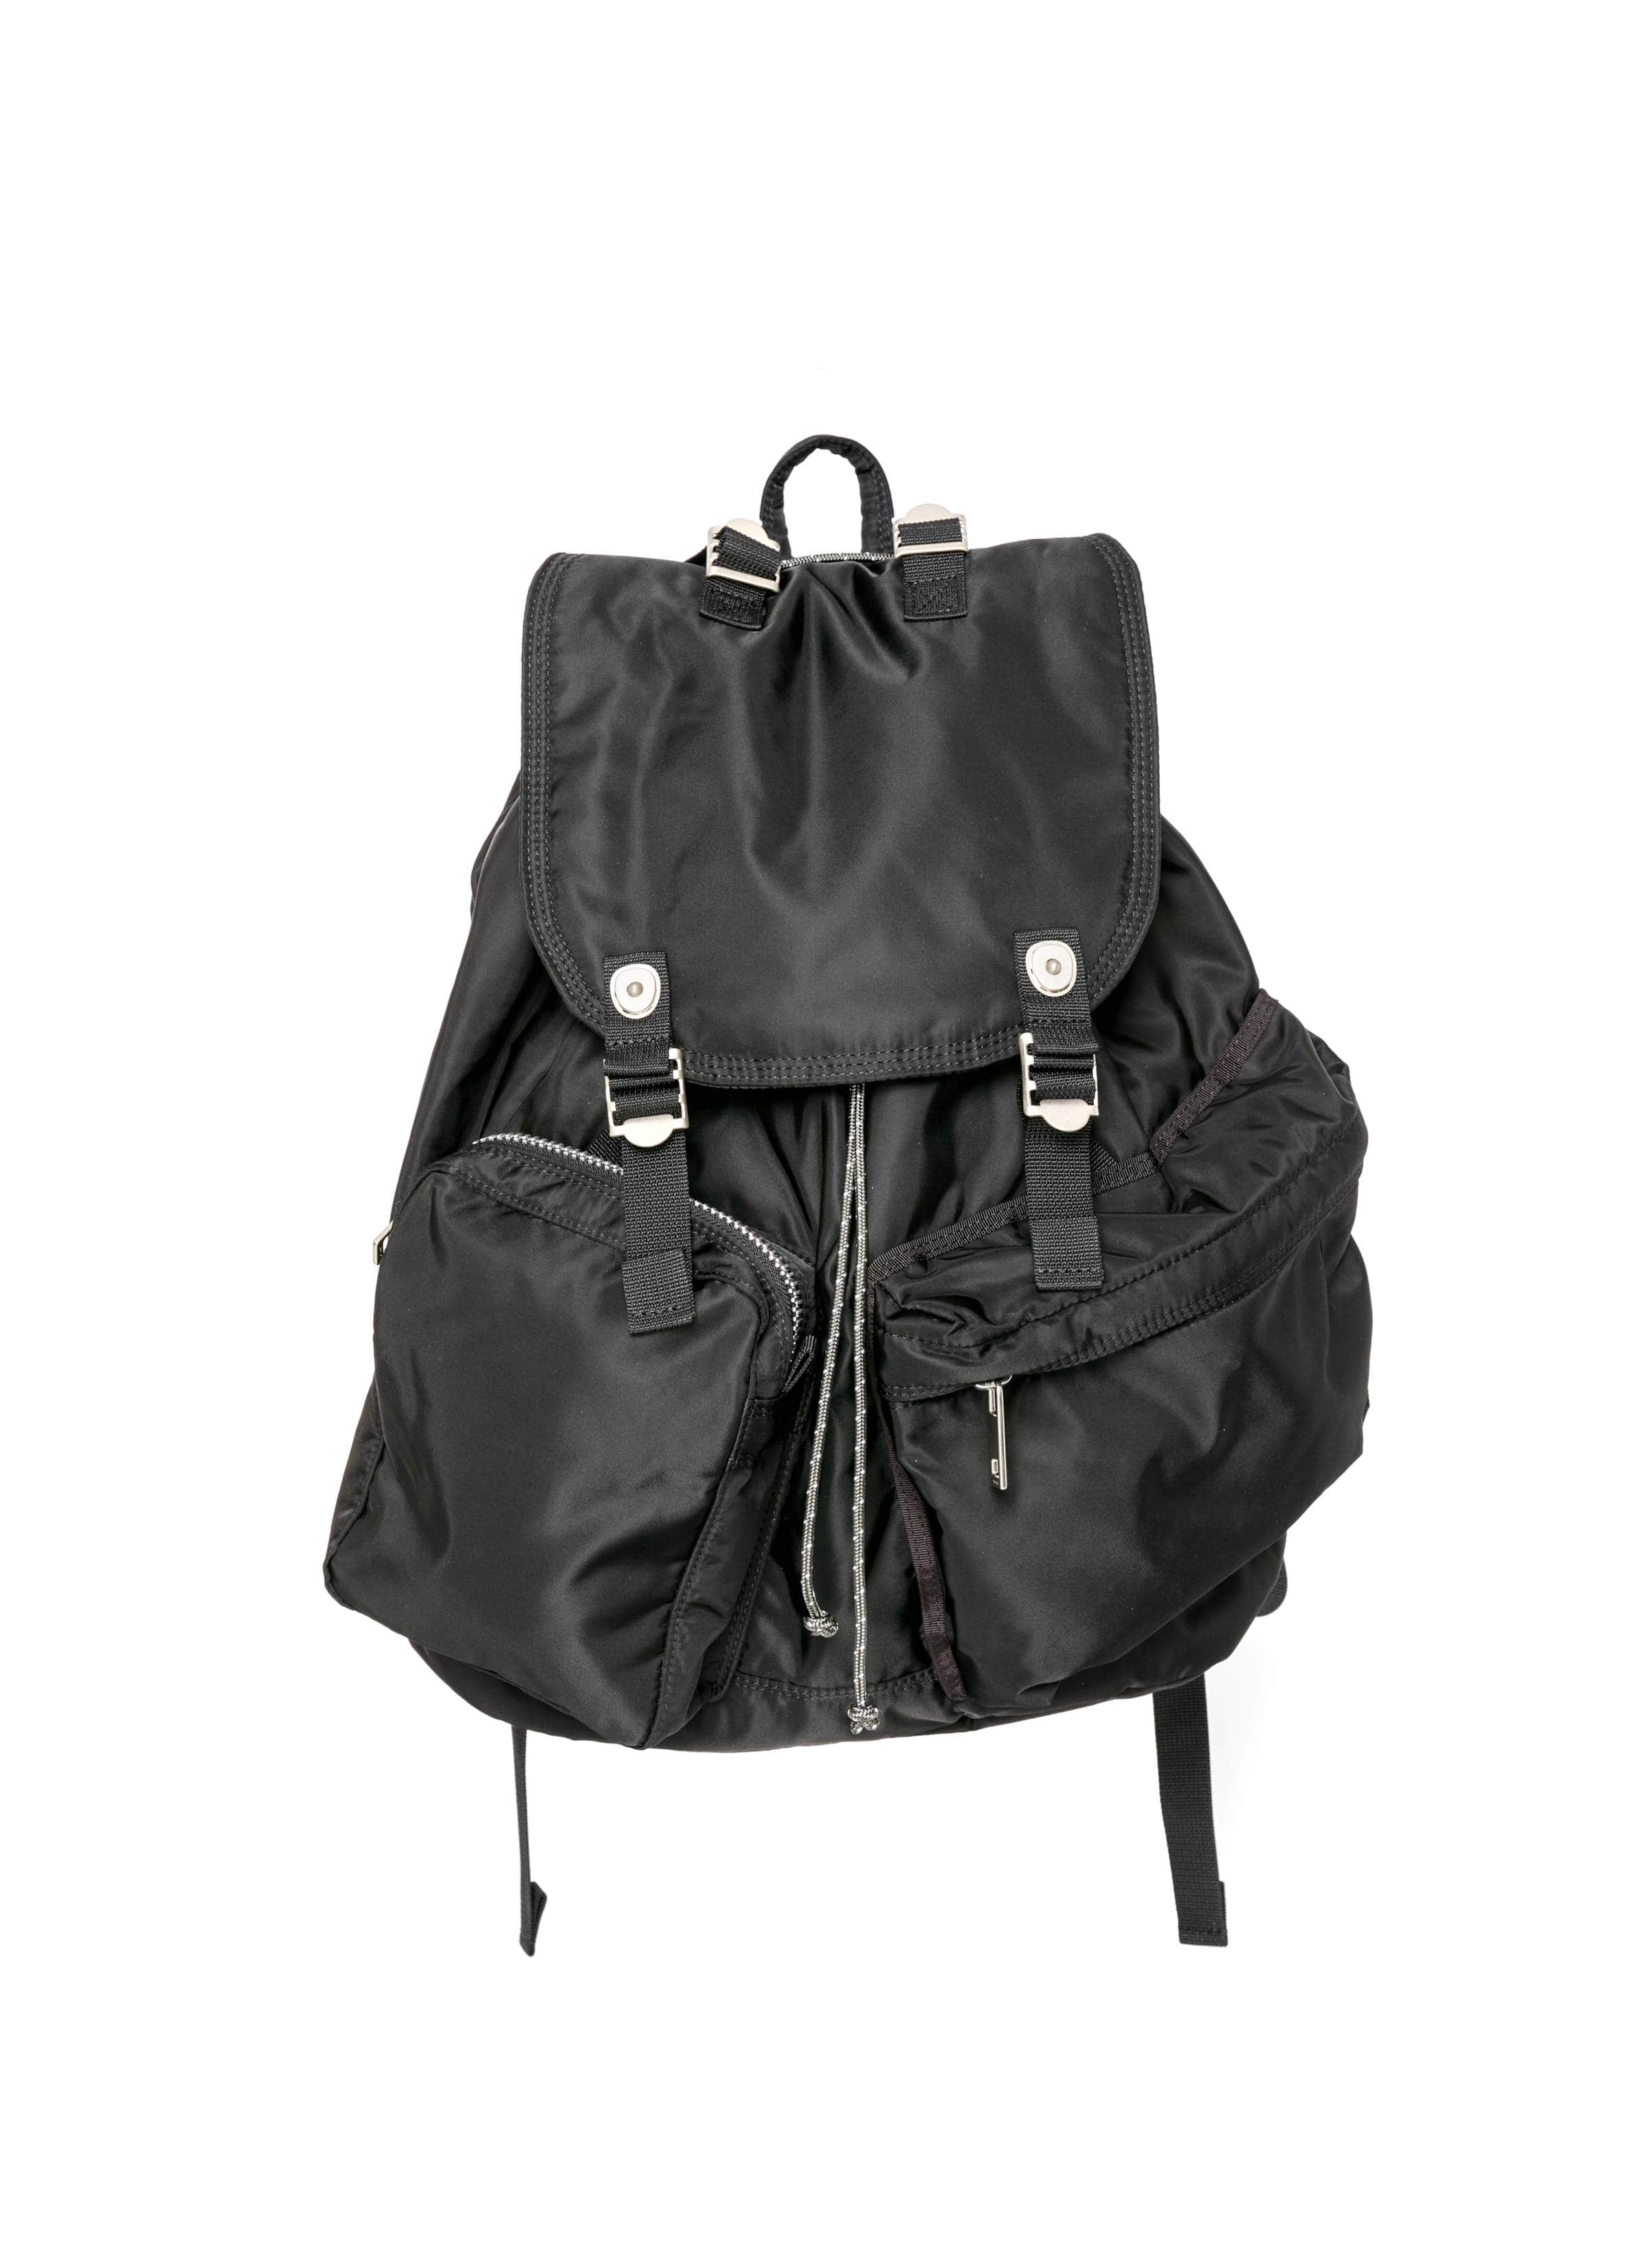 sacai x PORTER / Double Pocket Backpack高さ43cm幅36cm